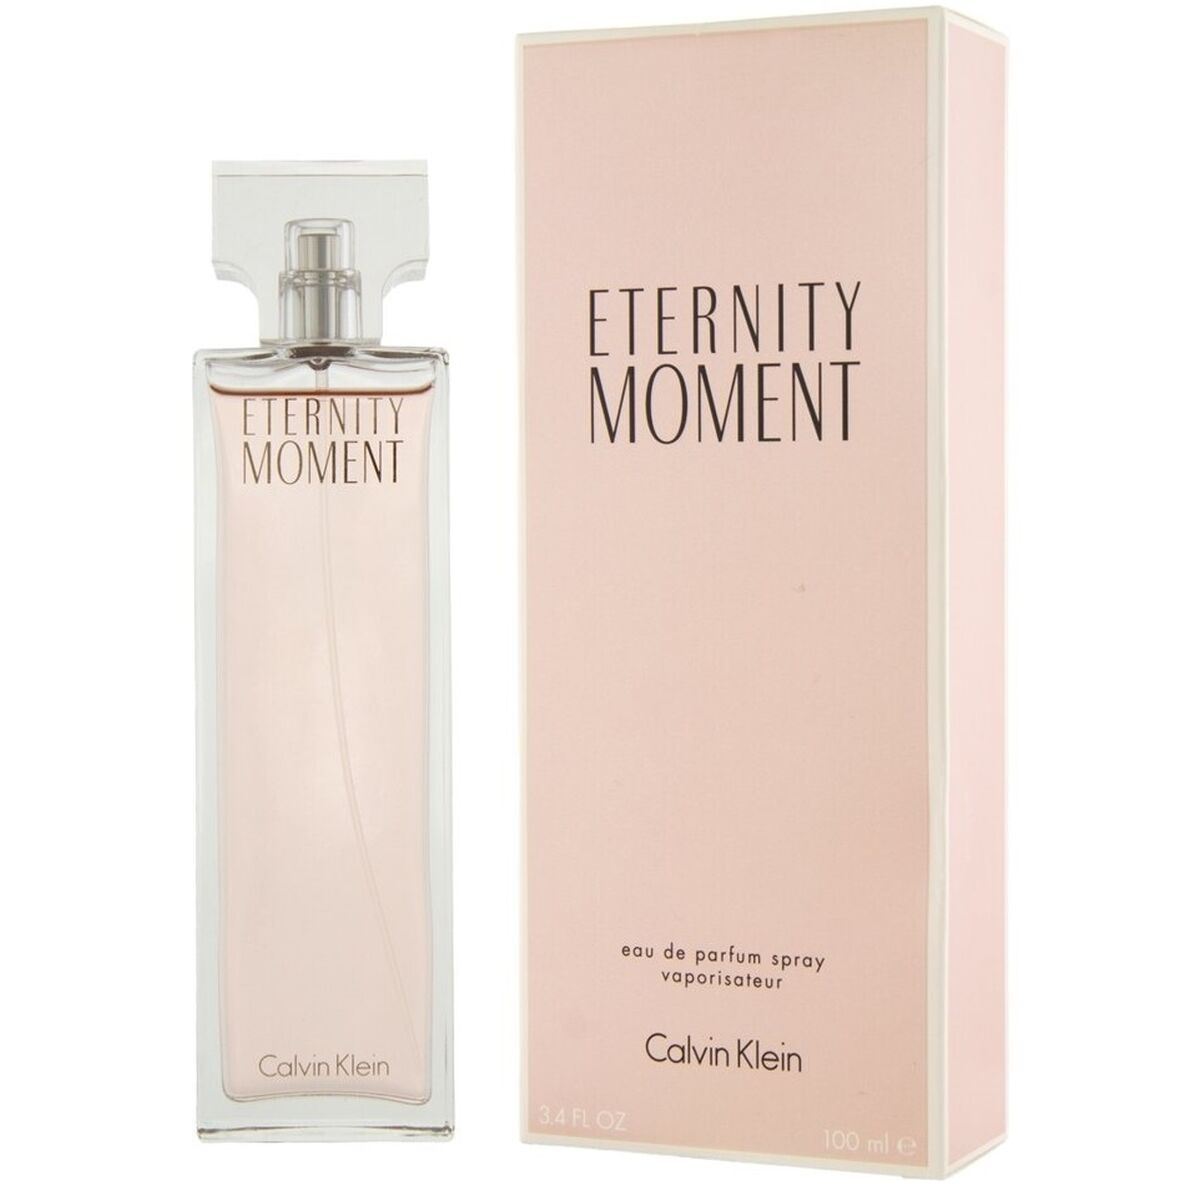 Parfum Femme Calvin Klein Eternity Moment 50 ml edp